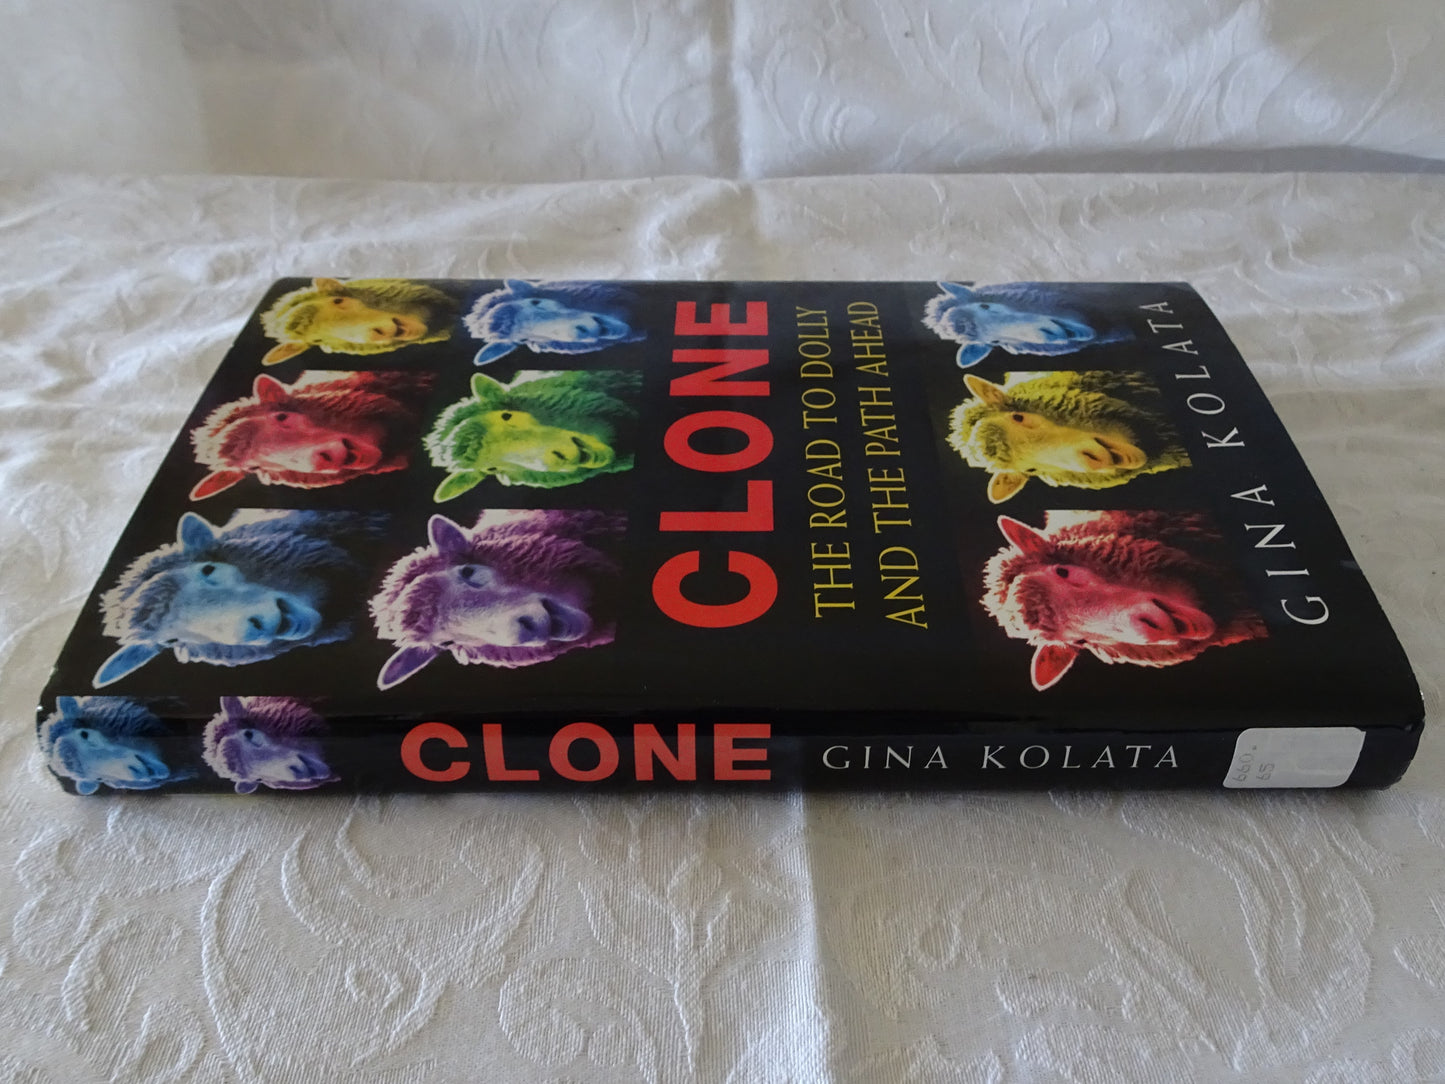 Clone by Gina Kolata